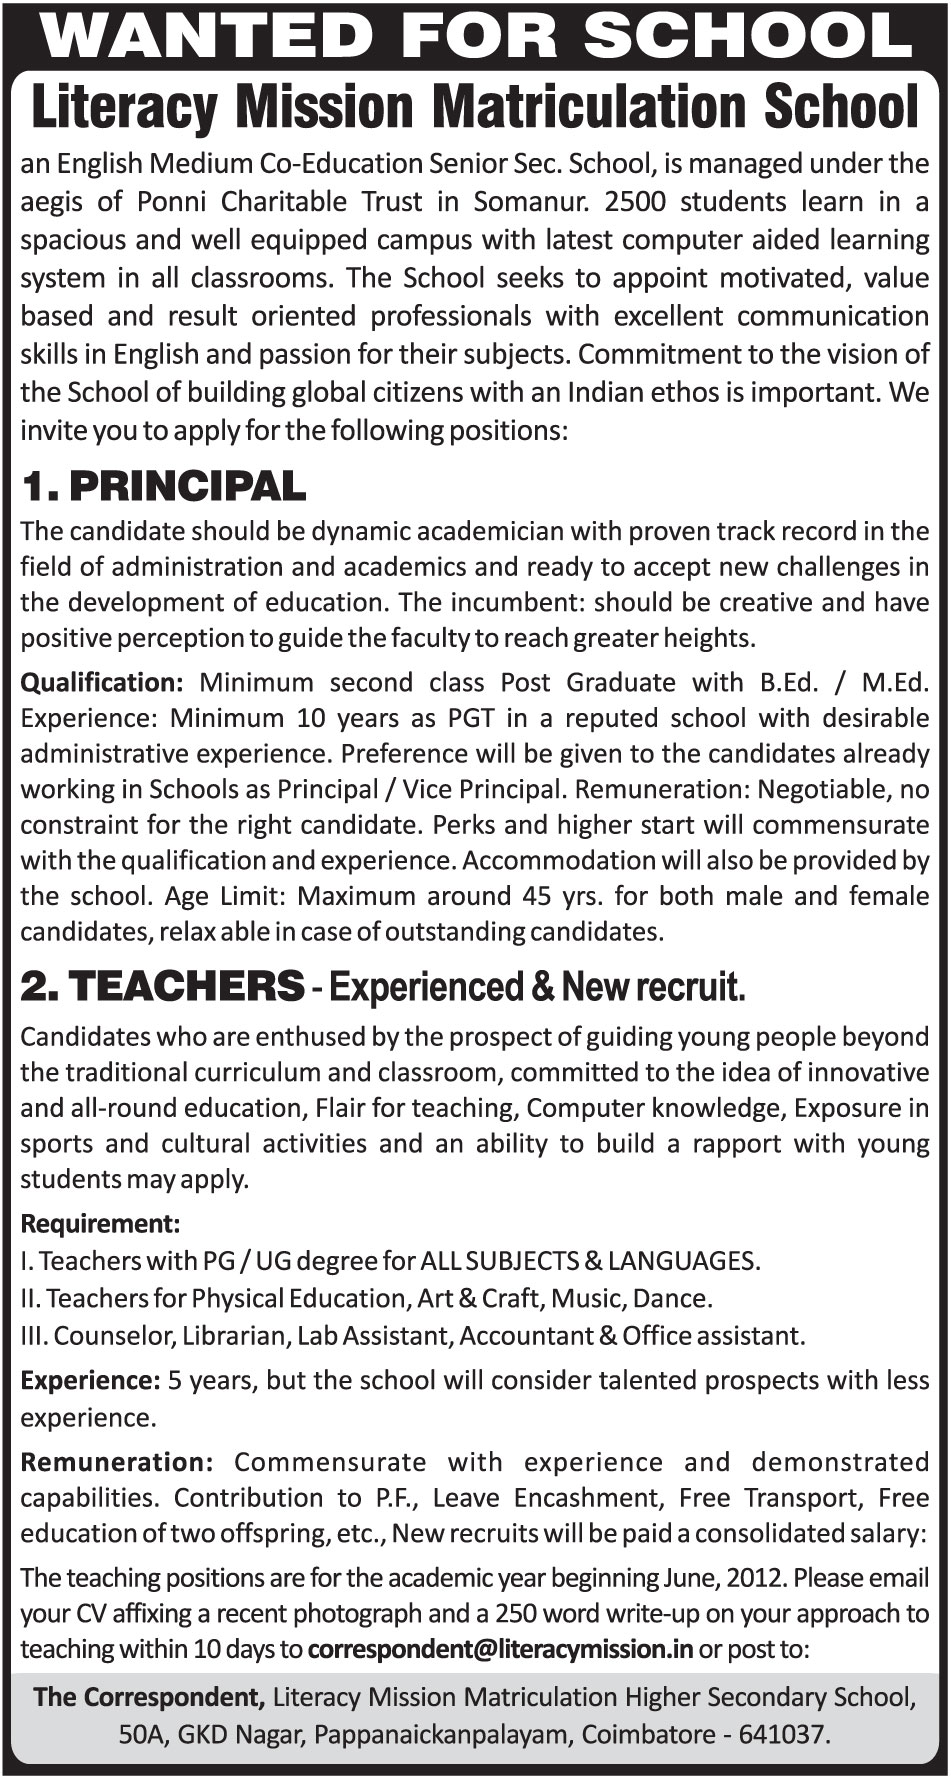 Literacy Mission Matriculation School Recruitment Ad